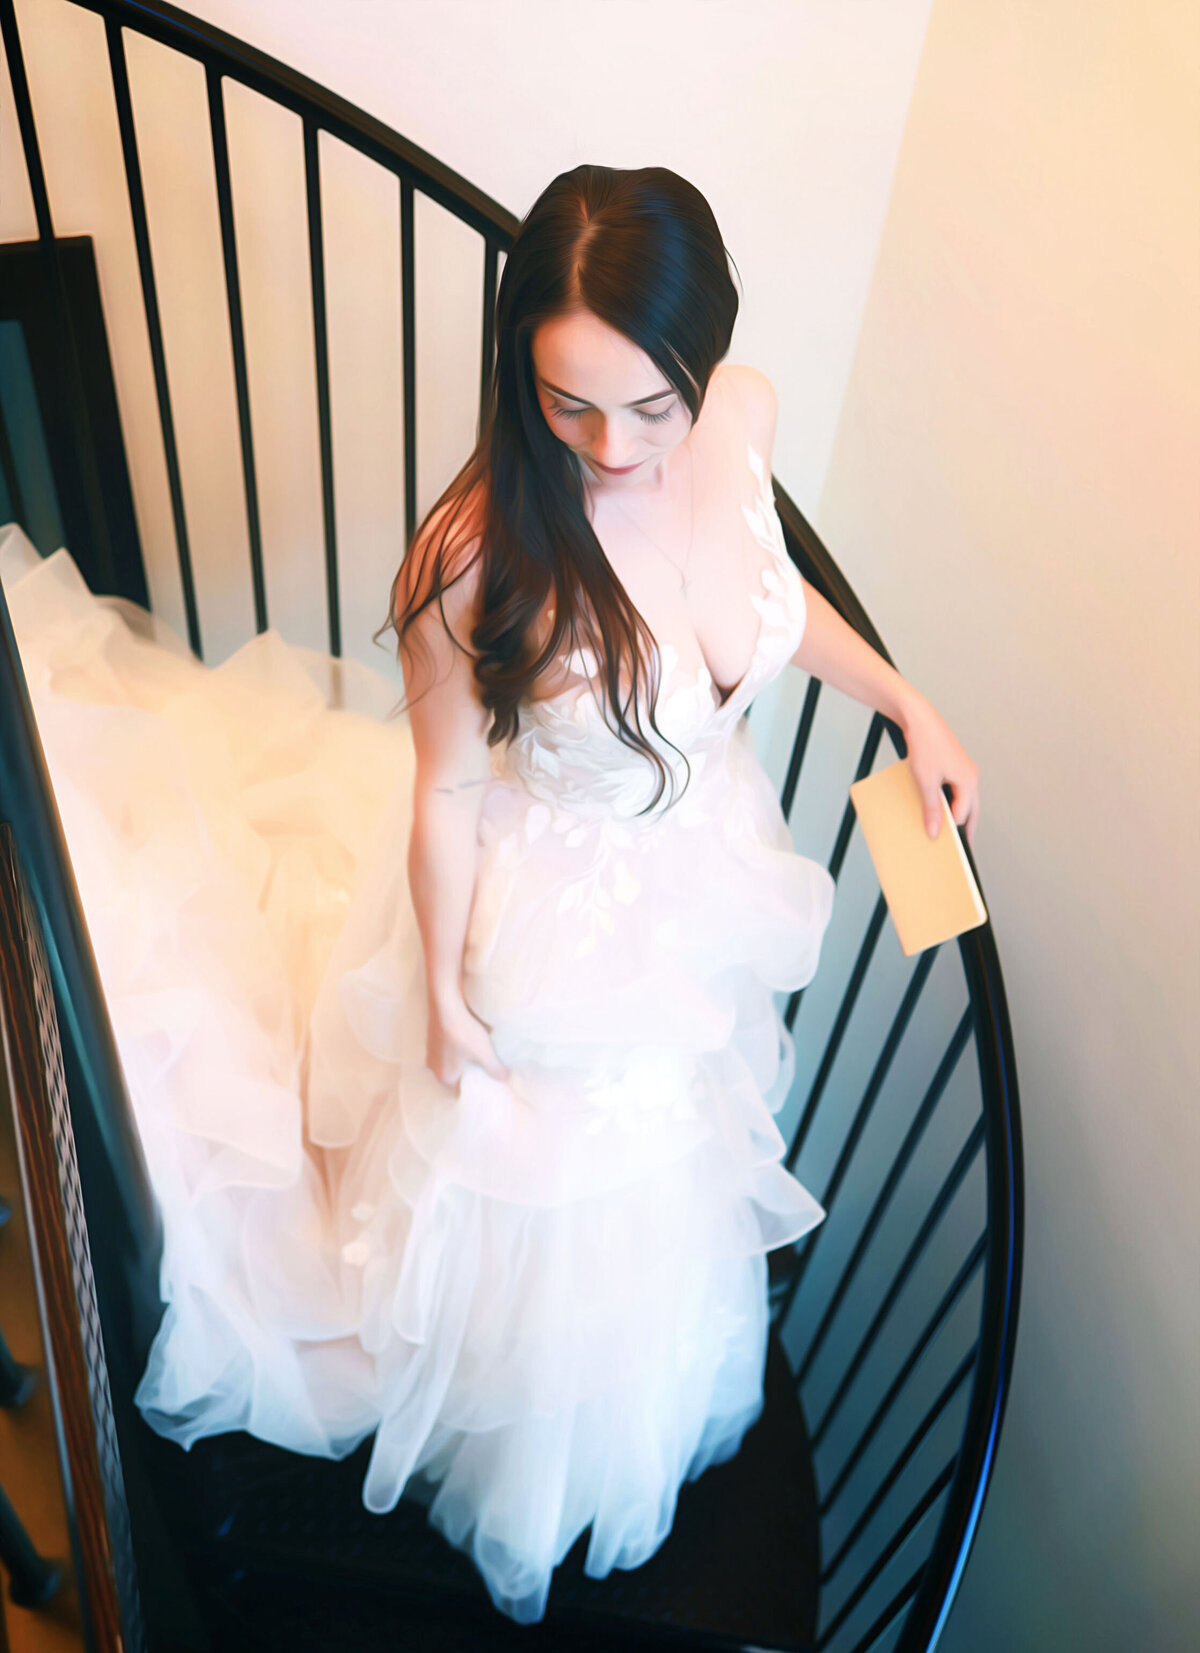 Beautiful bride with dark hair walking down a spiral staircase,